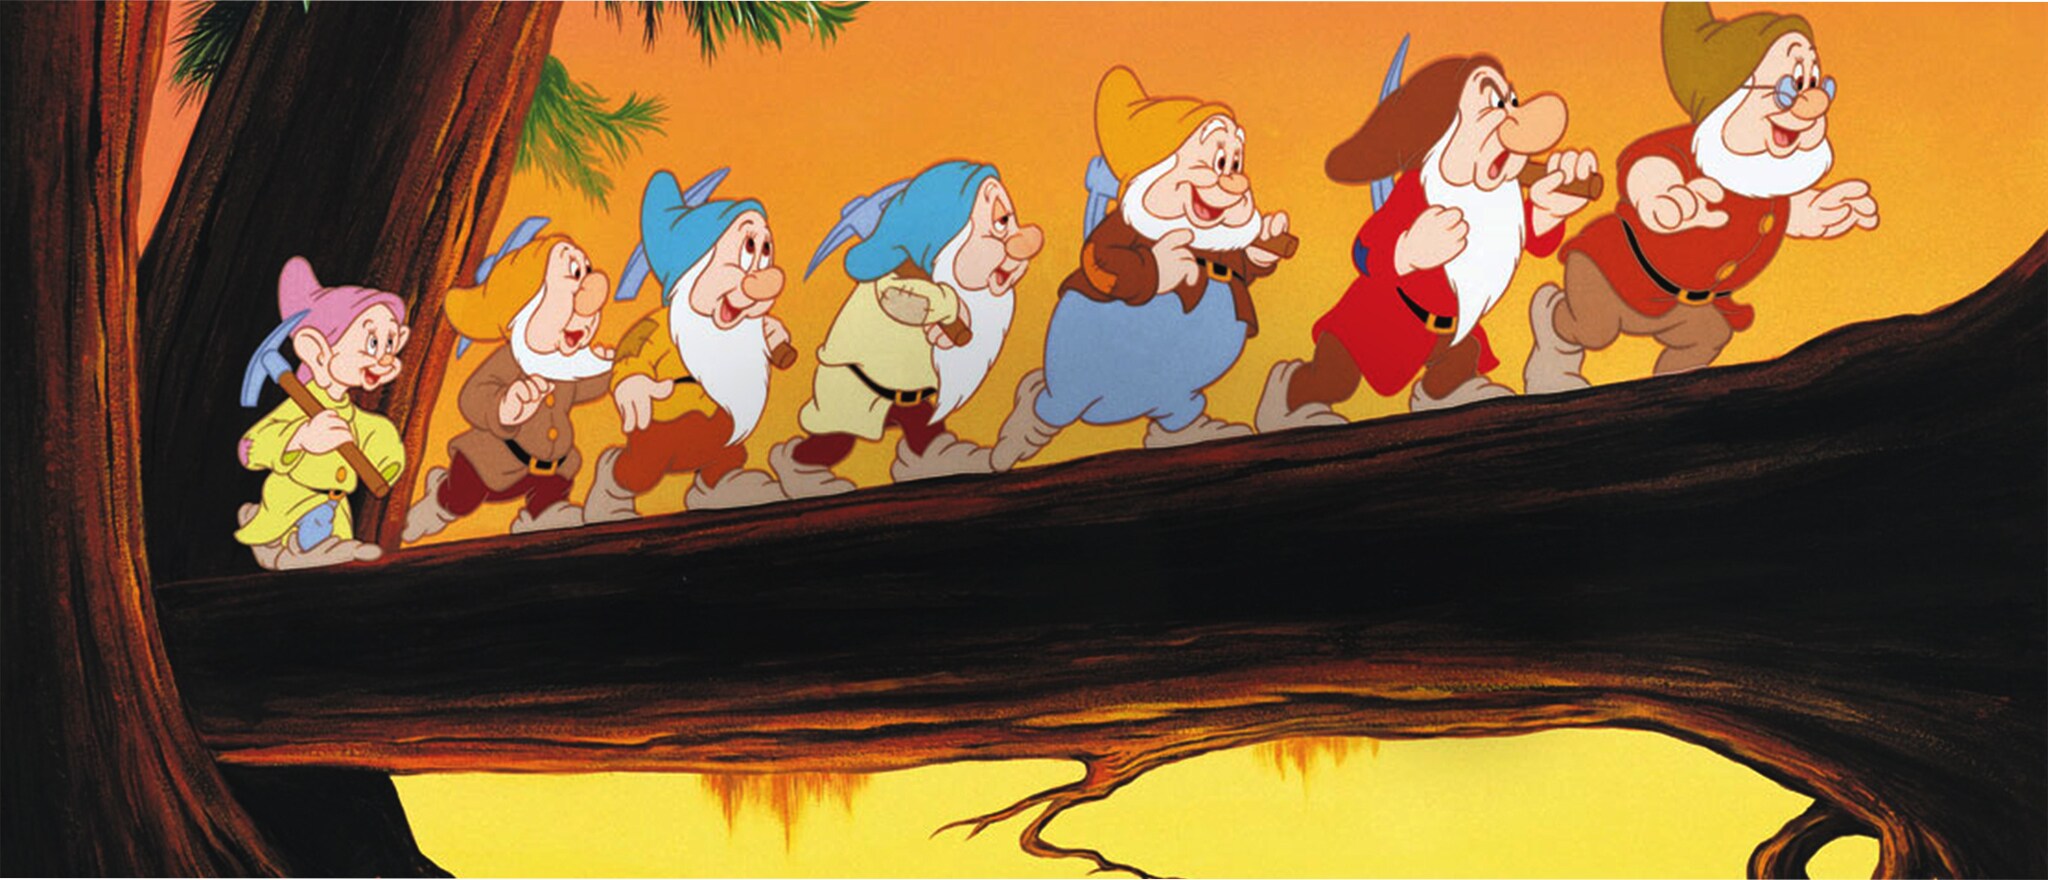 Snow White and the Seven Dwarfs Hero